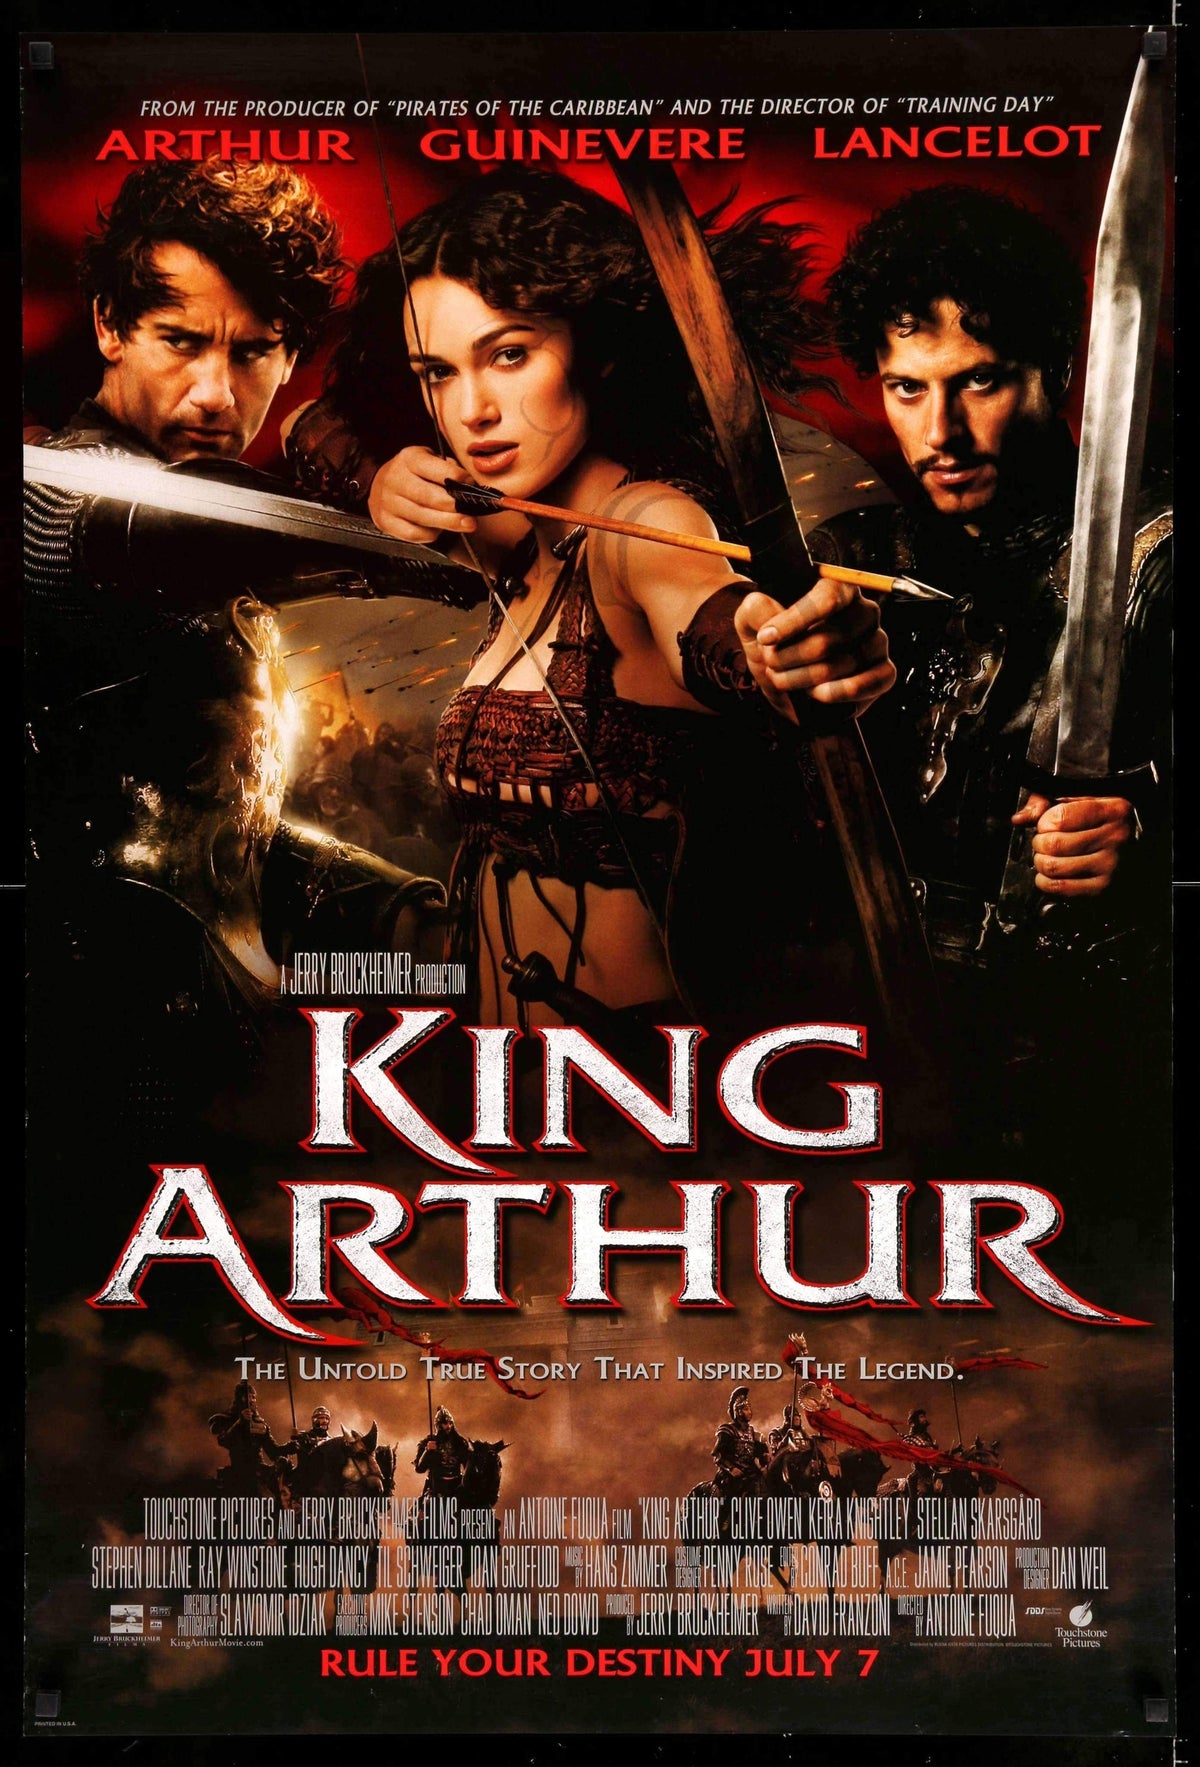 King Arthur (2004) original movie poster for sale at Original Film Art